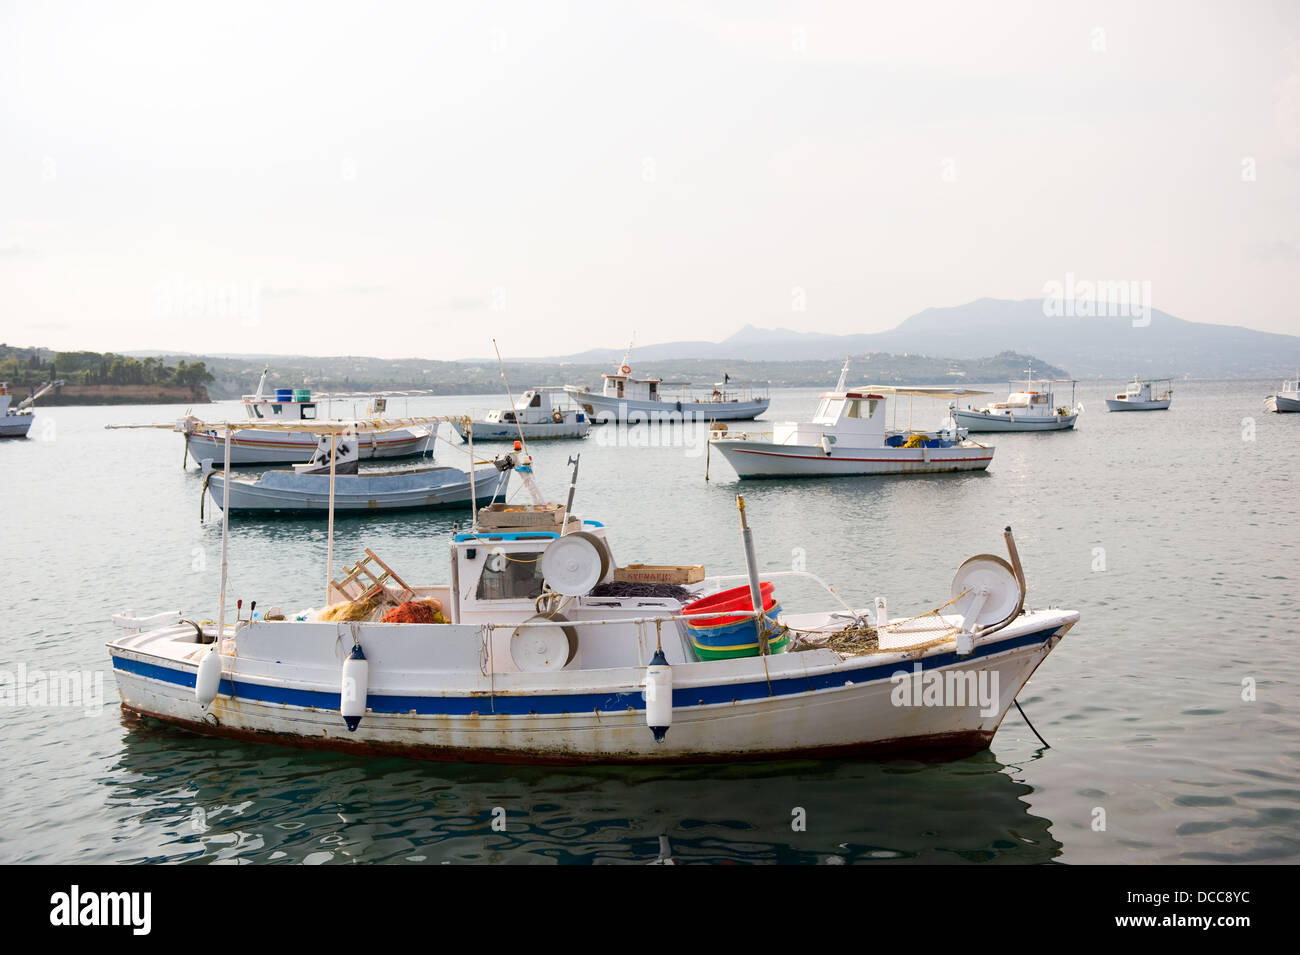 Fishery harbor with boats Stock Photo